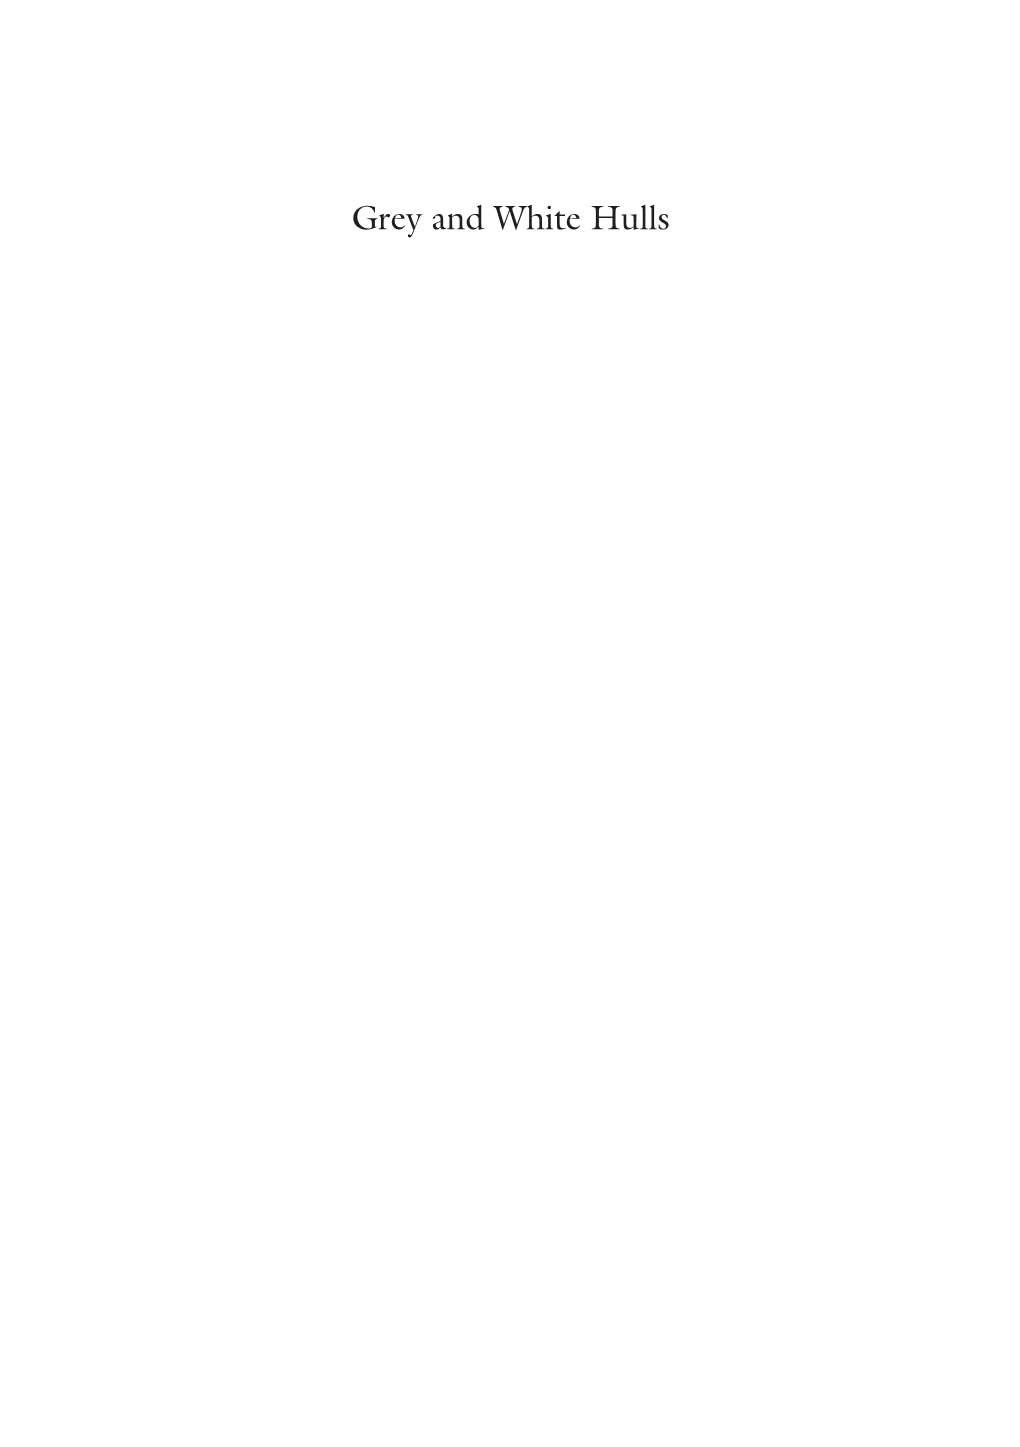 Grey and White Hulls Ian Bowers · Swee Lean Collin Koh Editors Grey and White Hulls